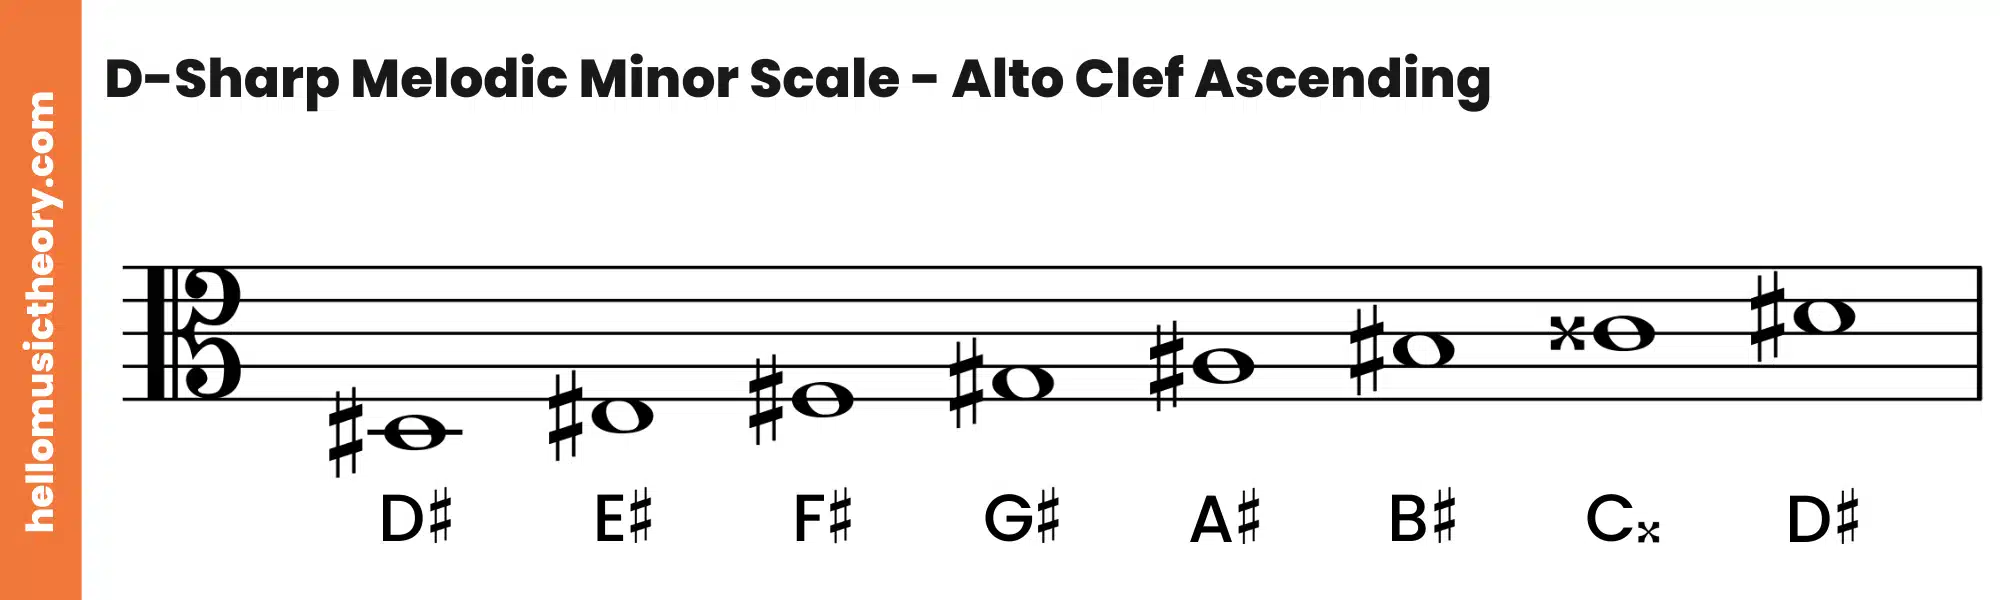 D-Sharp Melodic Minor Scale Alto Clef Ascending